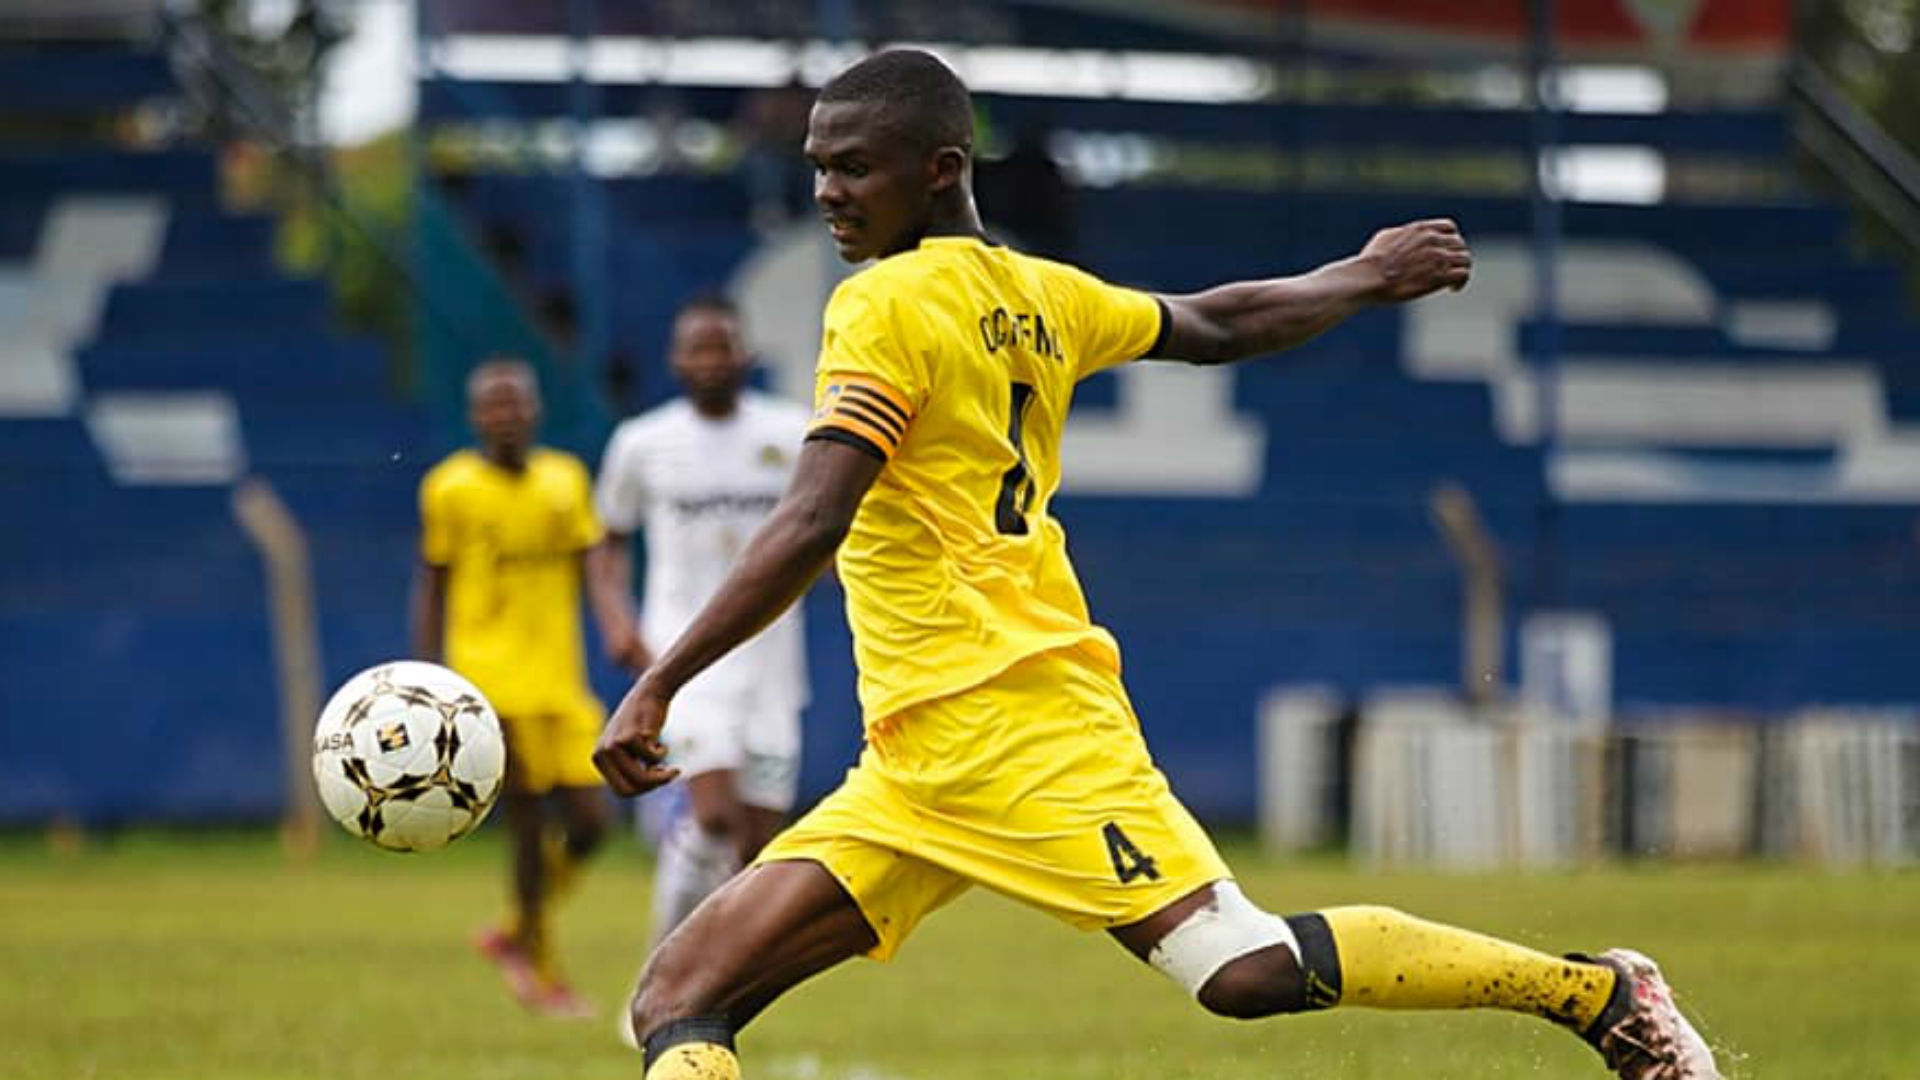 Wazito FC captain Ochieng and Nizigiyimana to miss clash against Chemelil Sugar